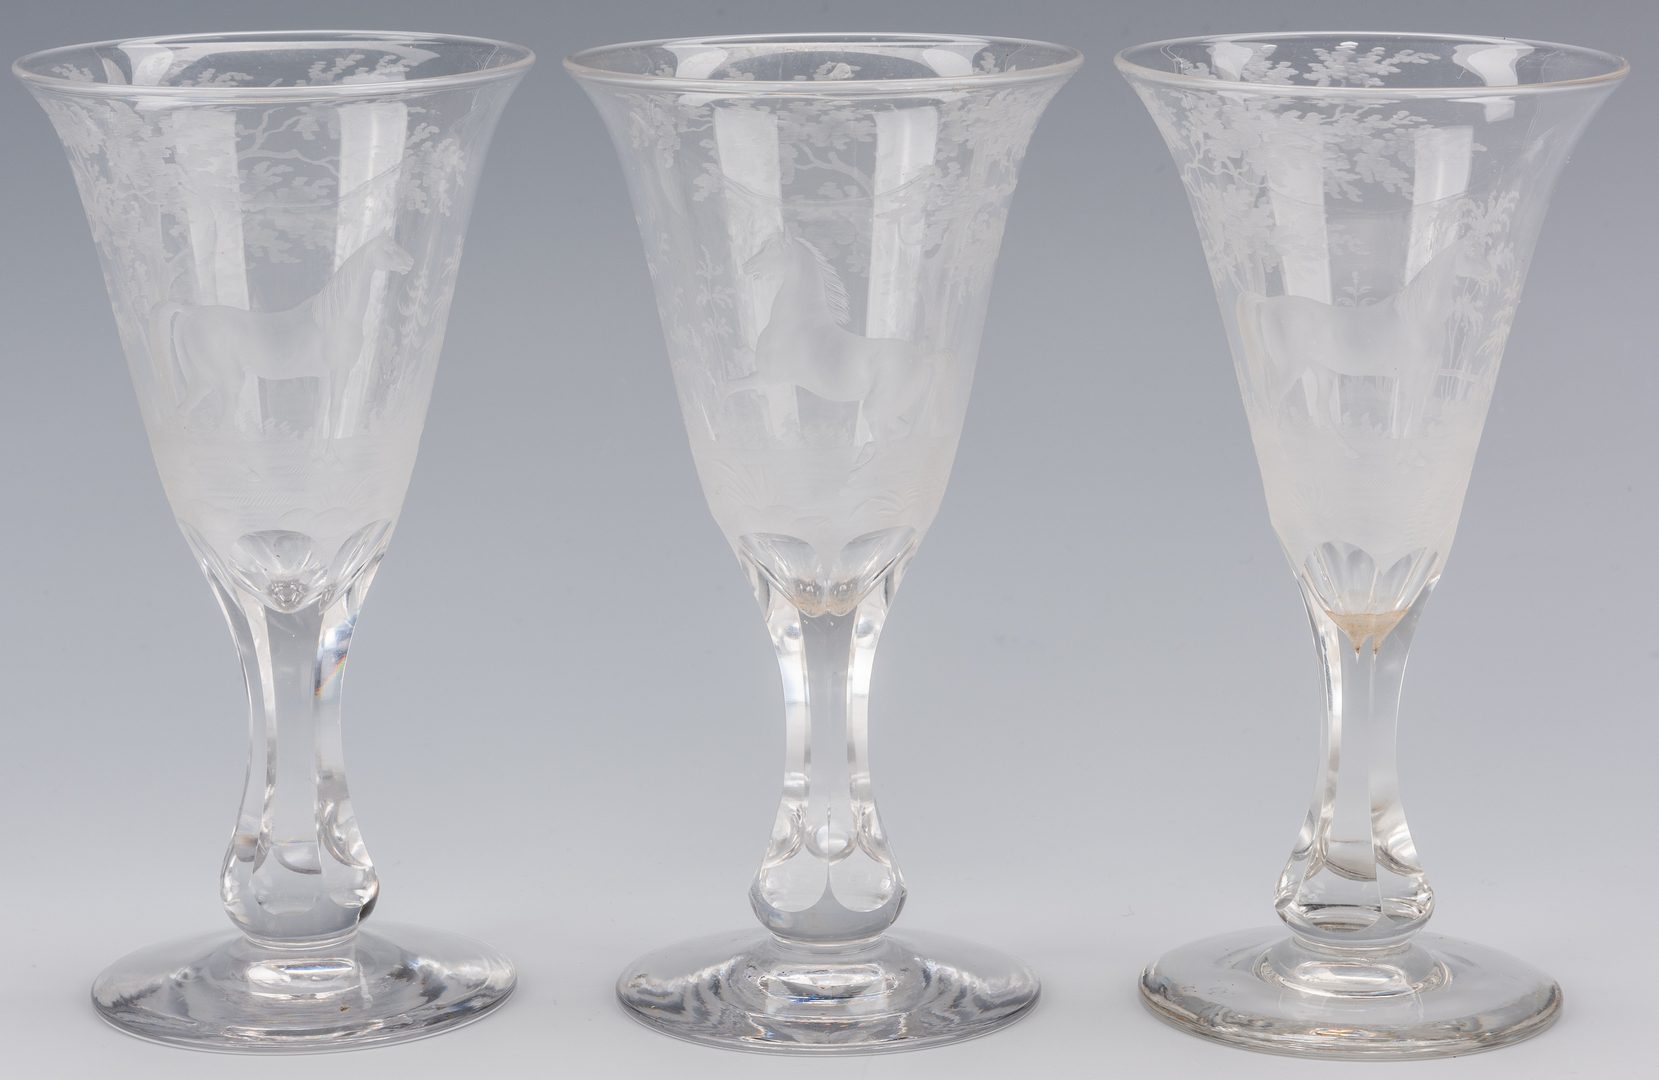 Sold at Auction: 11 Vintage Etched Stemmed Water Glasses